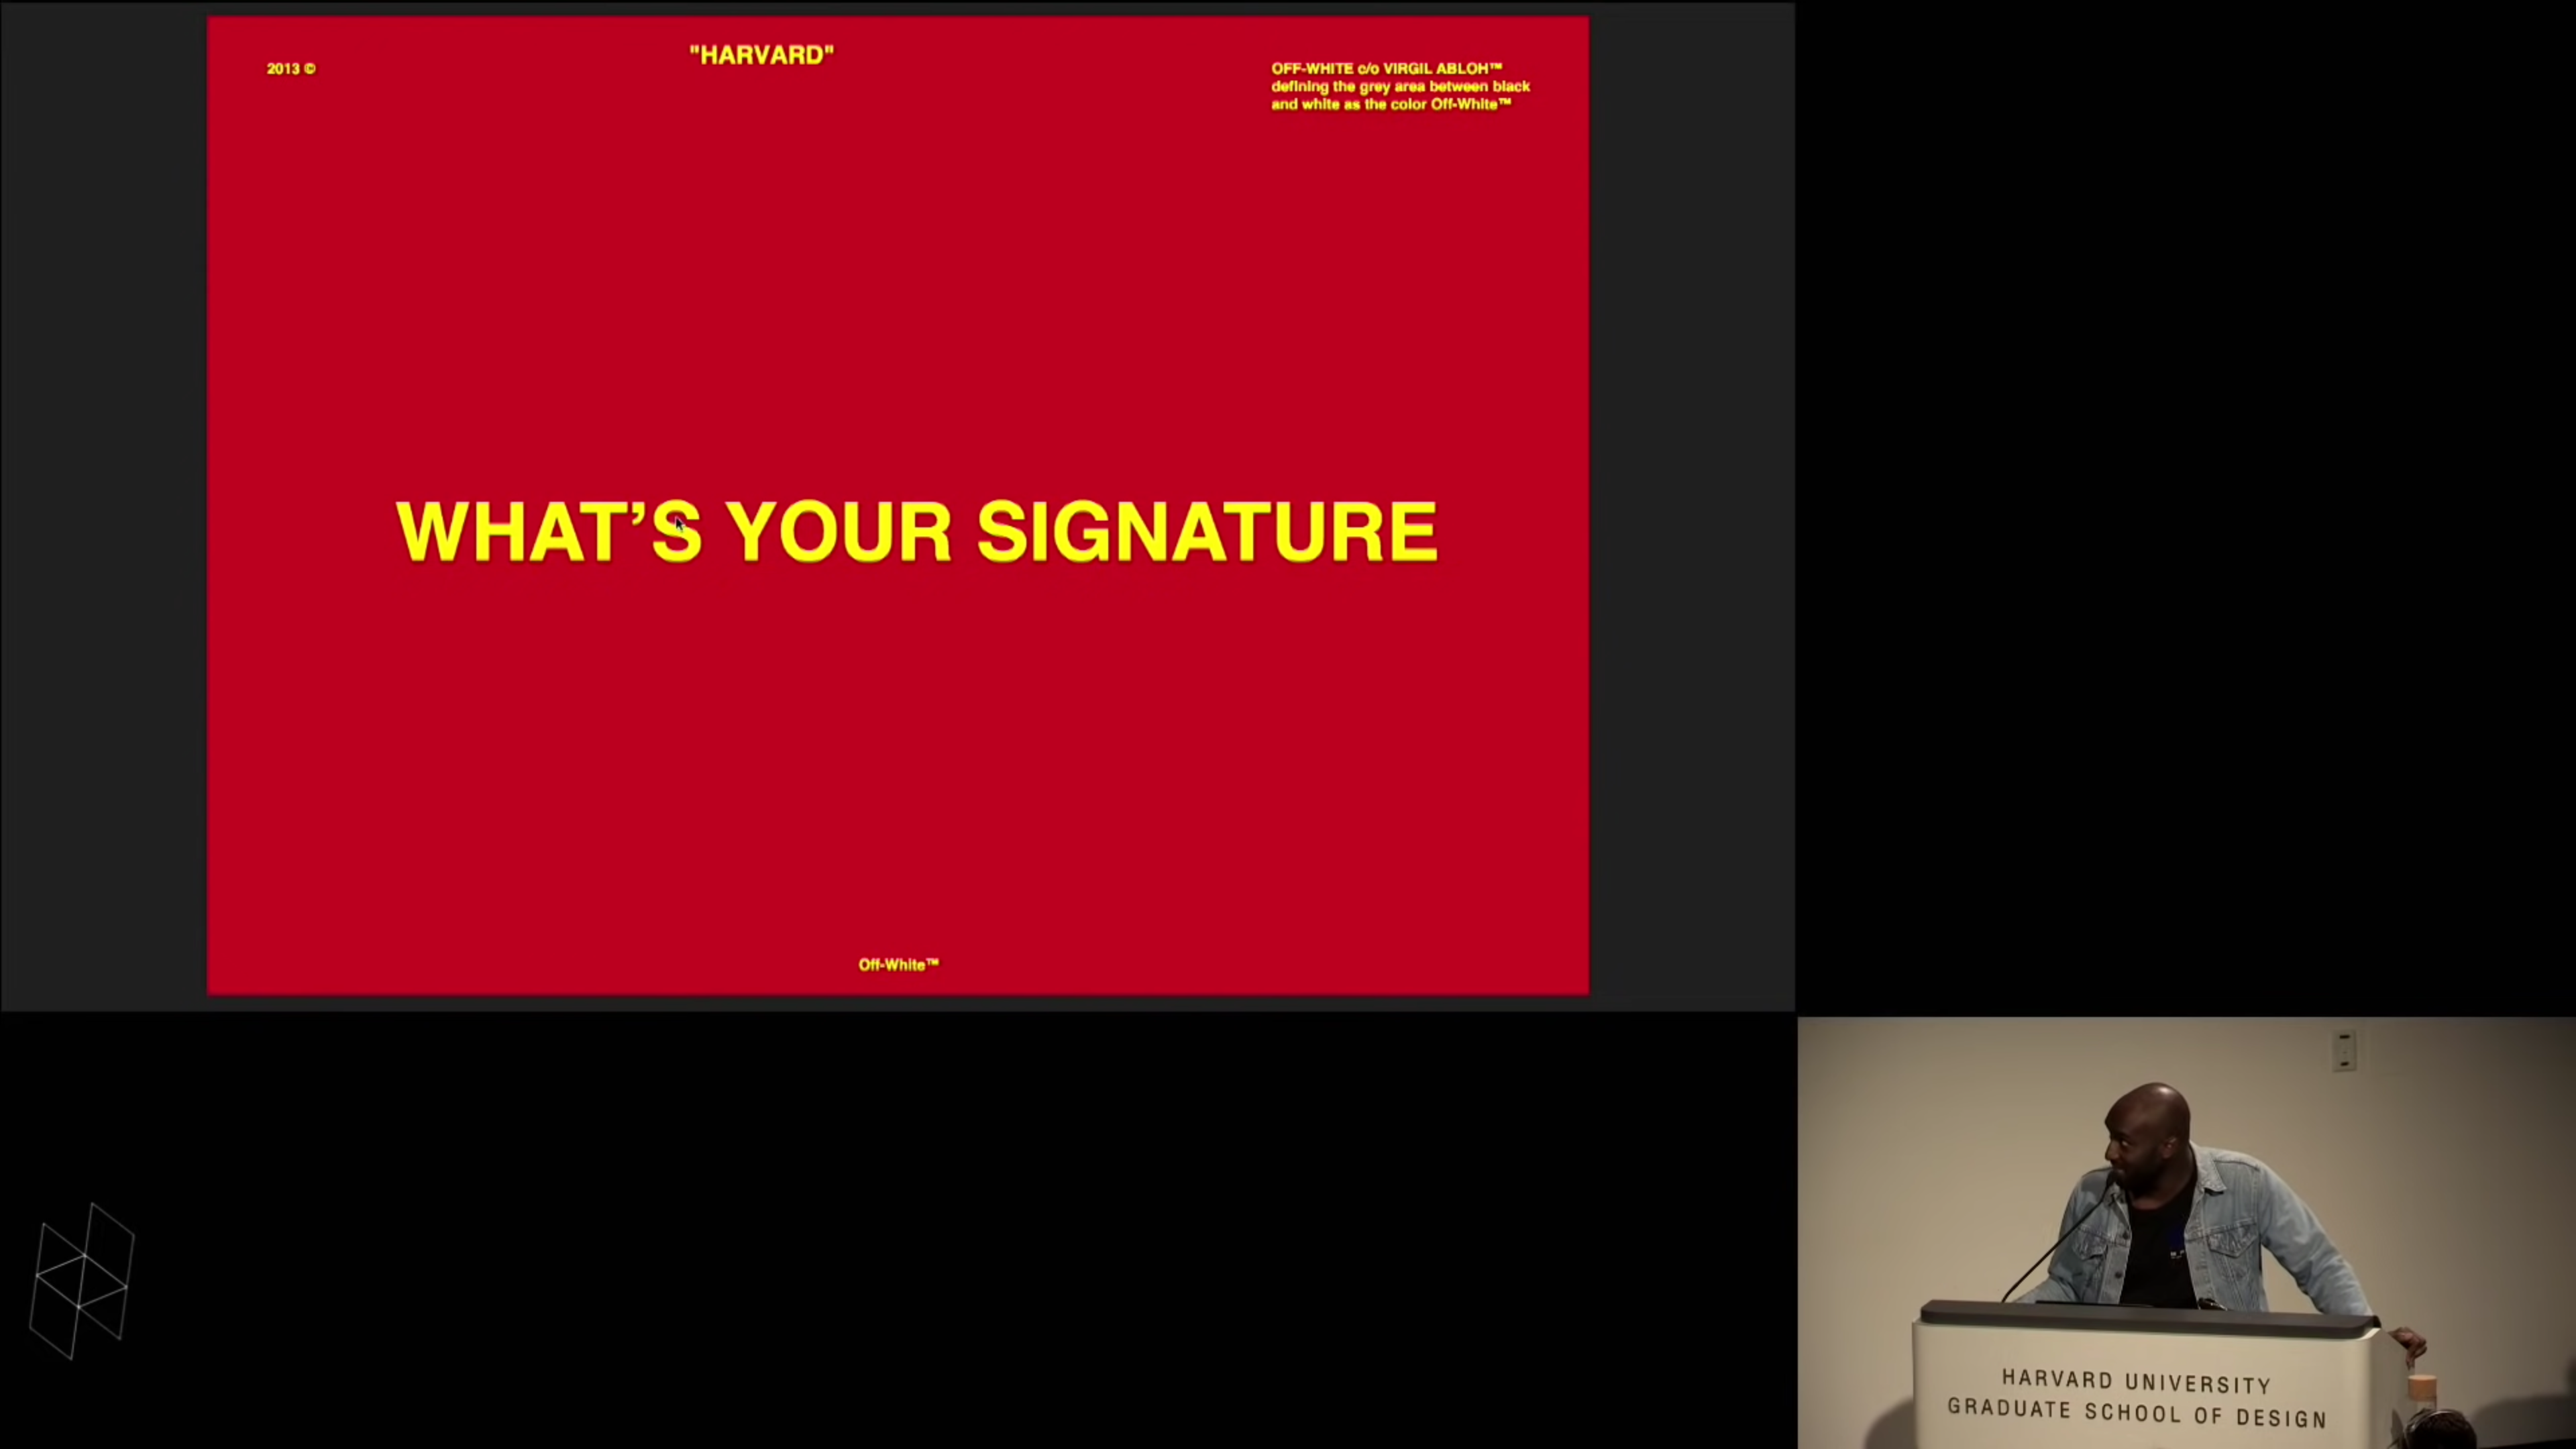 The Red Slides. The slides Virgil Abloh deems cheat codes.